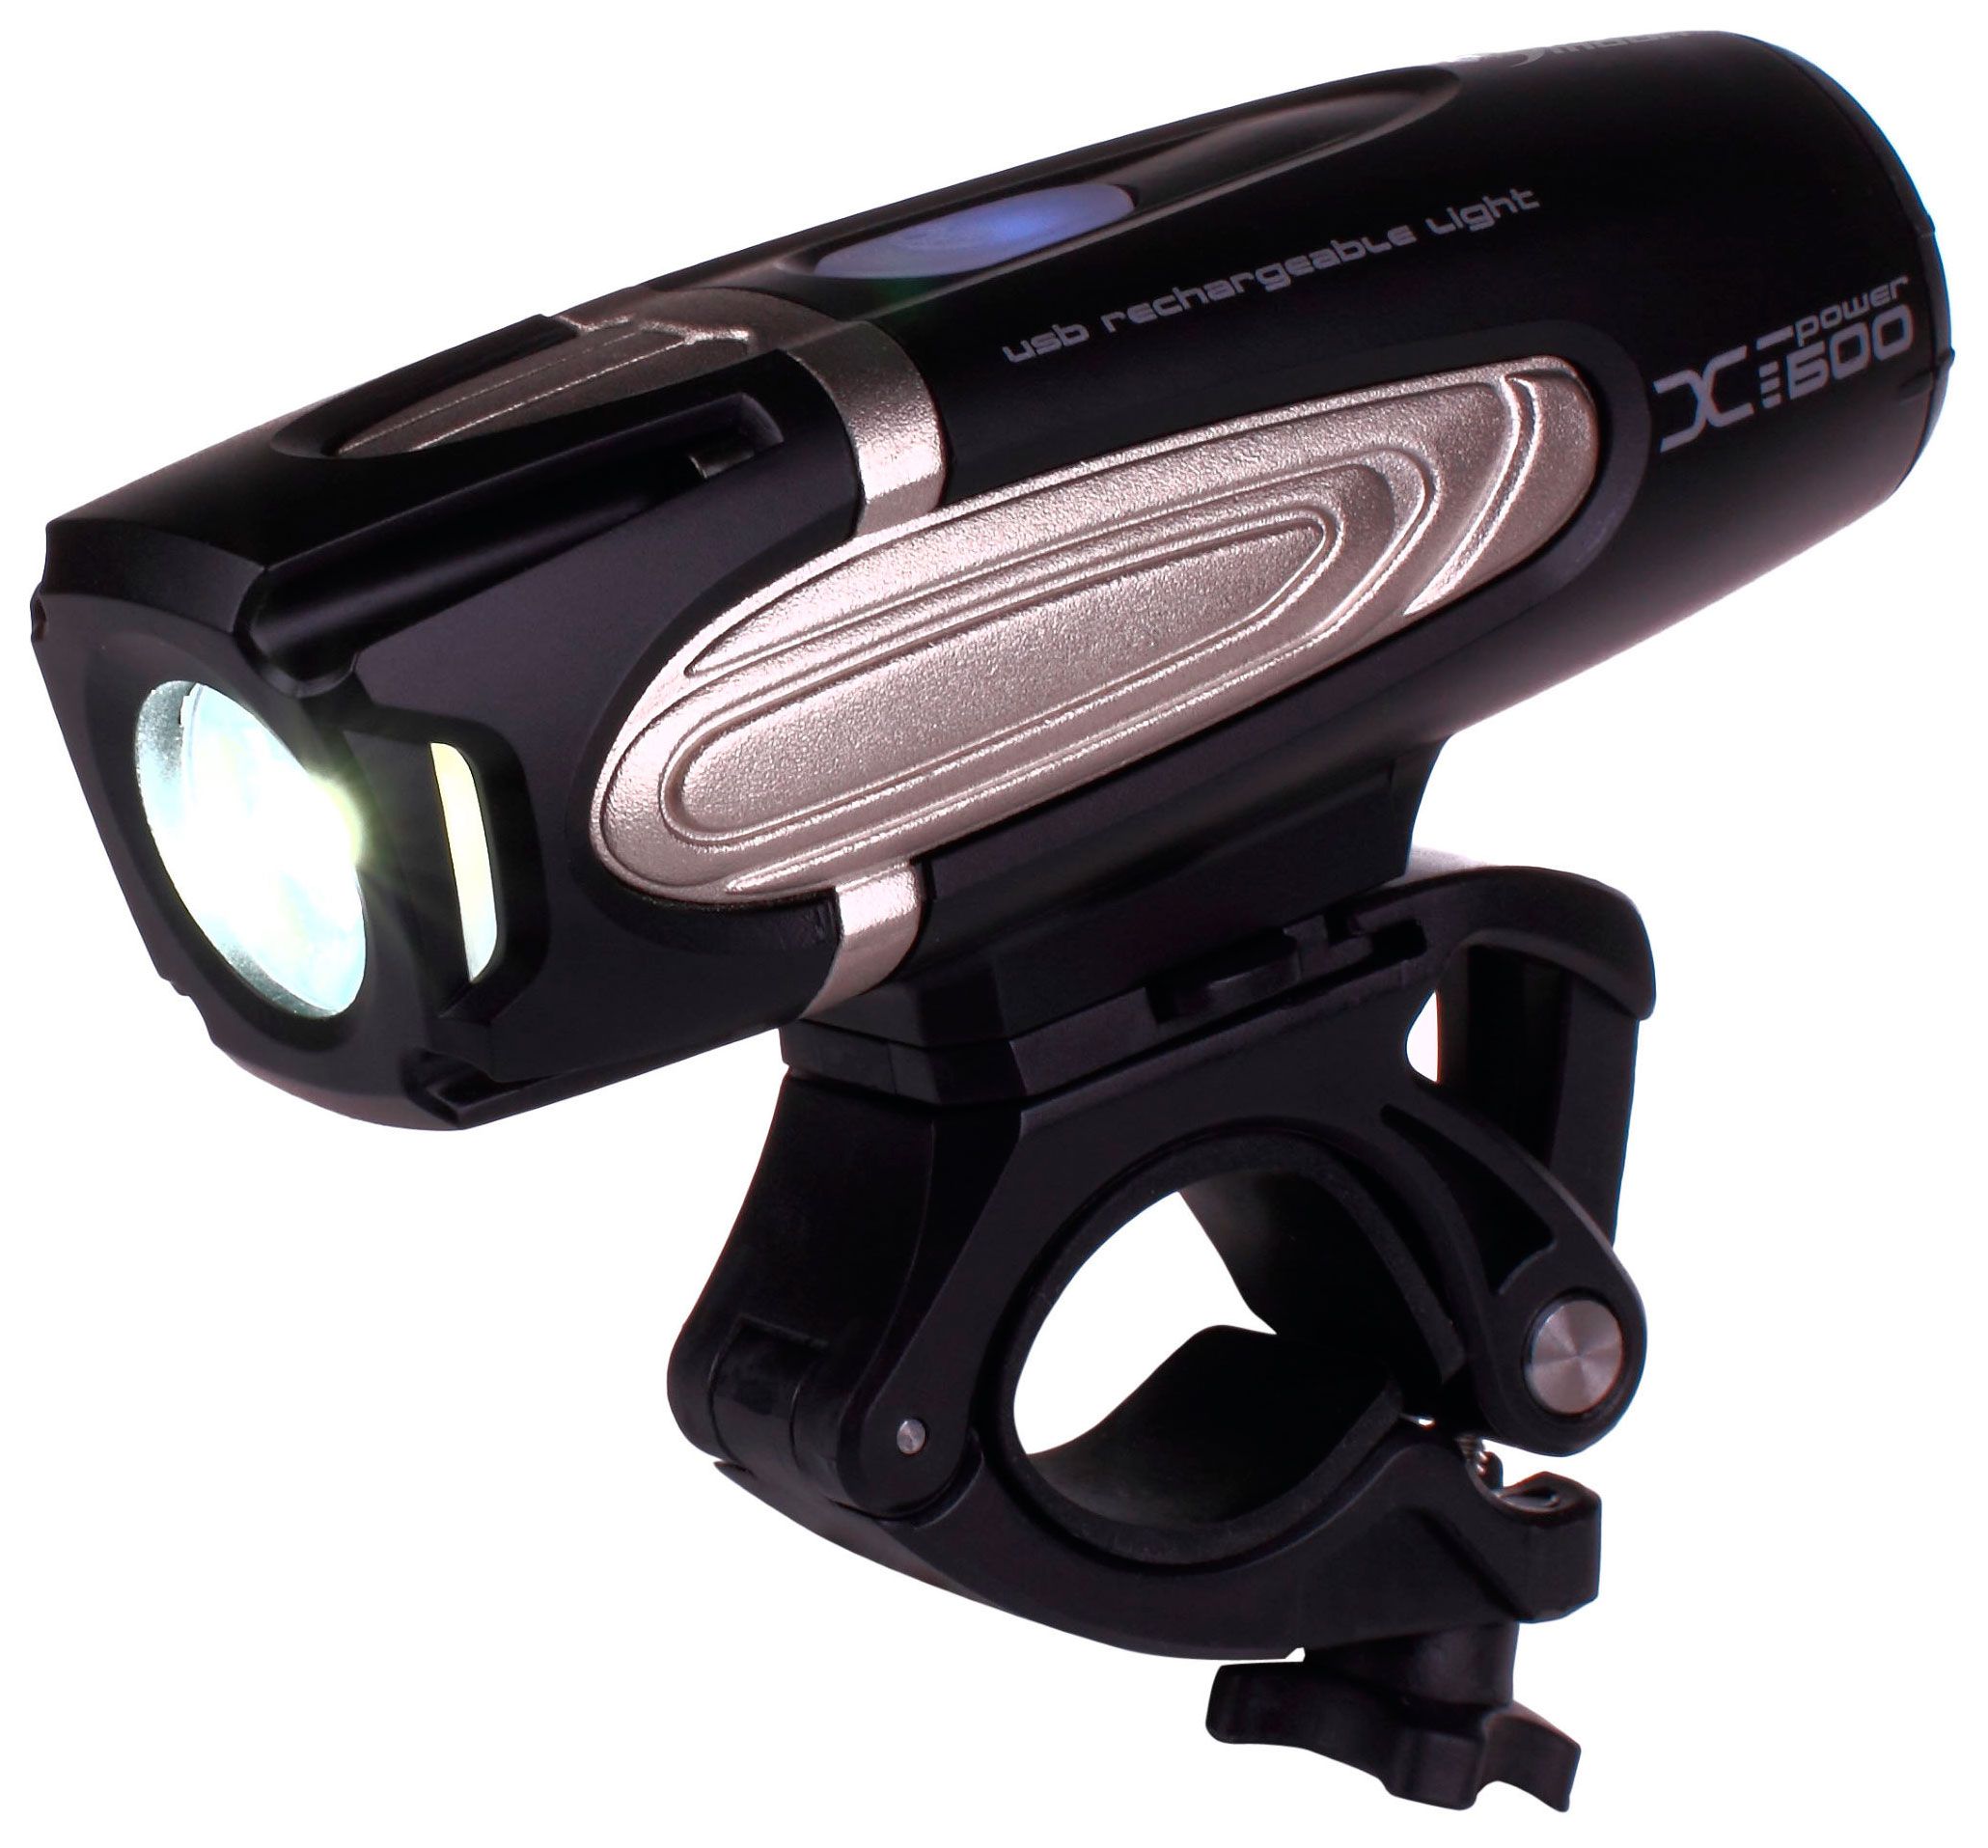  Передний фонарь для велосипеда Weston Pointer X-Power 600